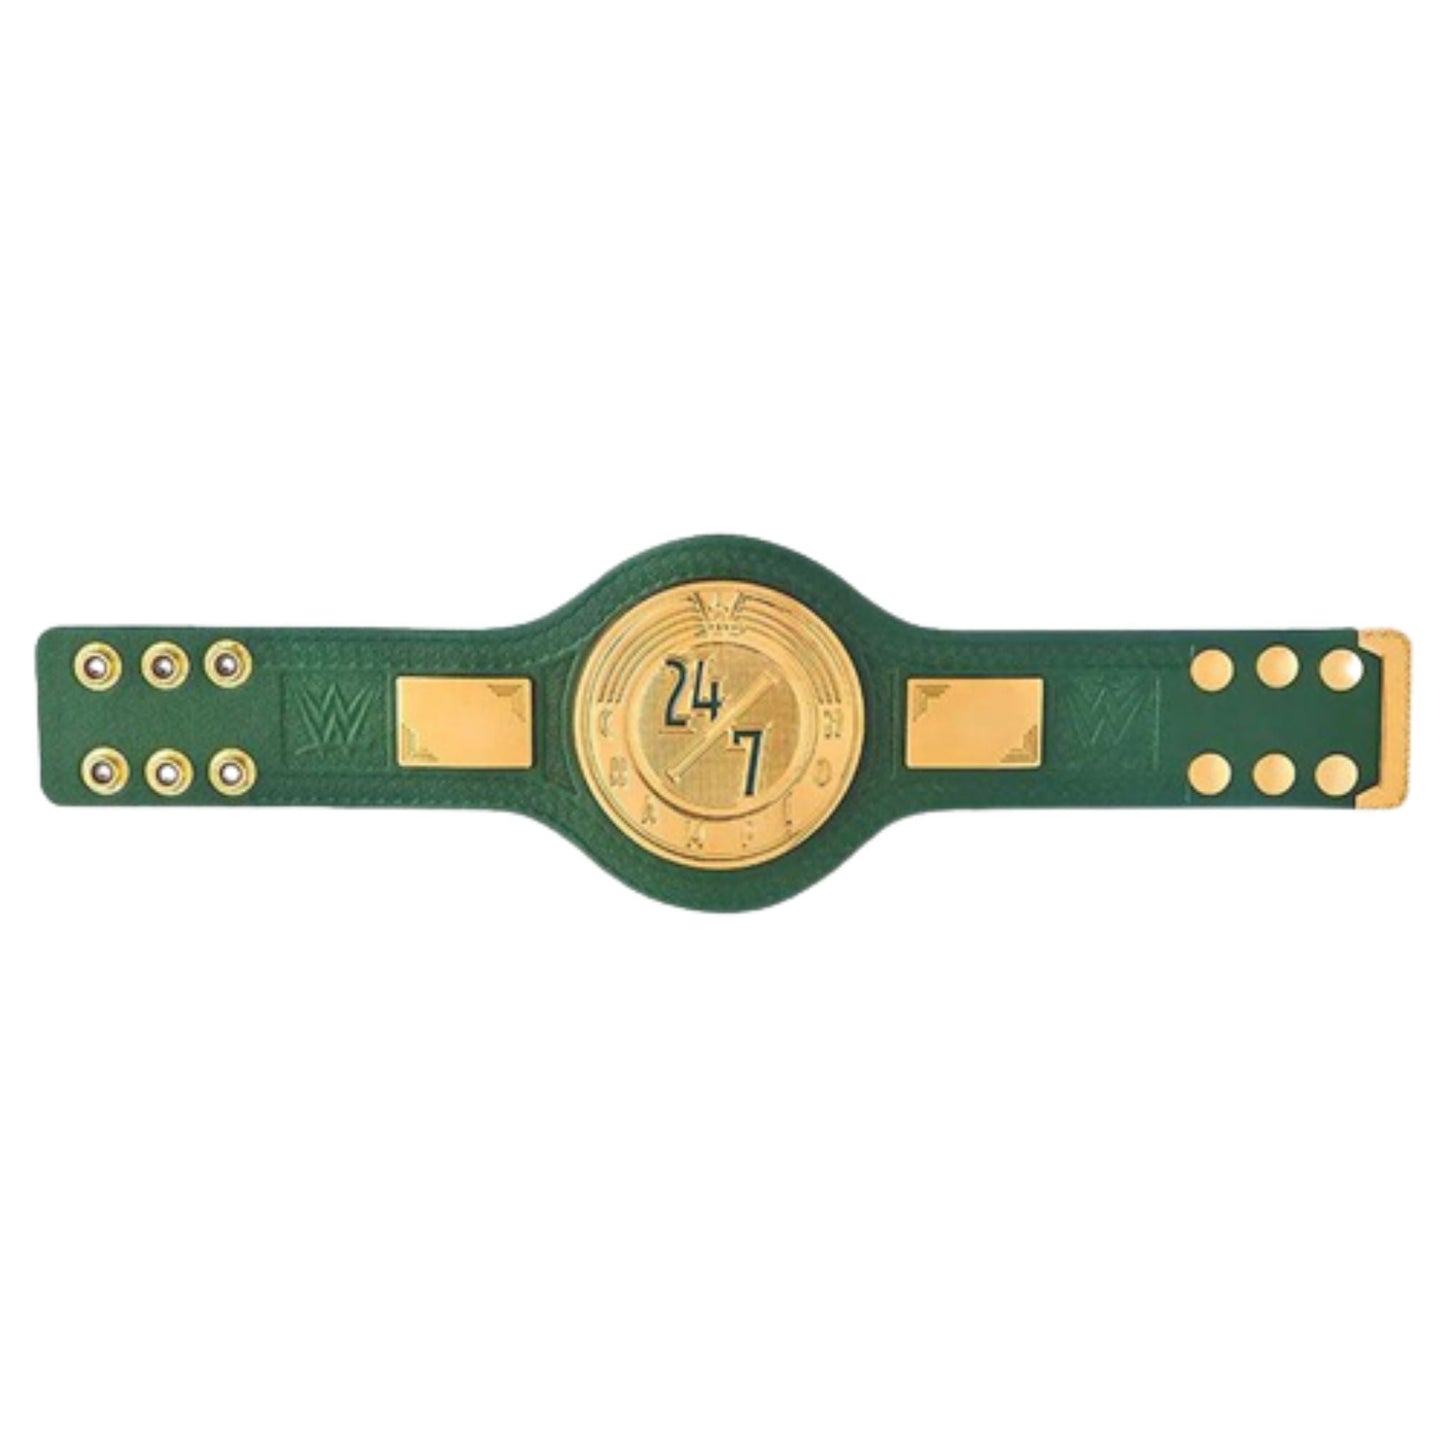 wwe 24/7 championship mini replica title belt